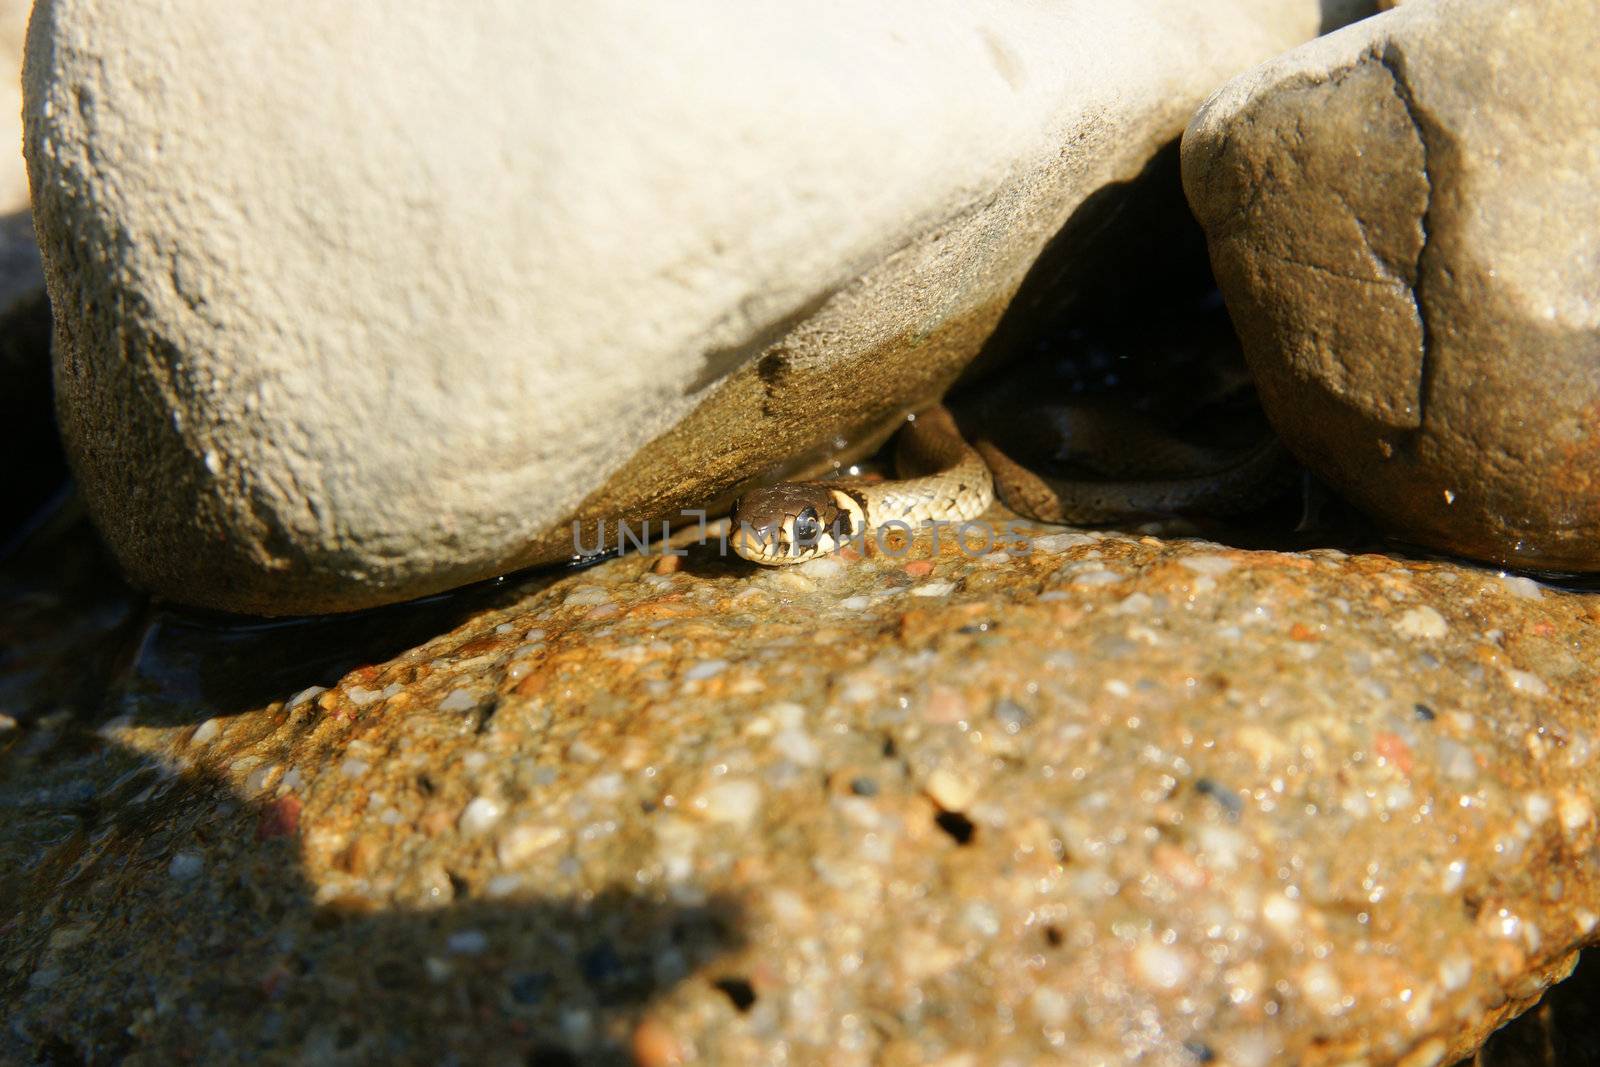 Aqua  worm snake on the river stone close-up